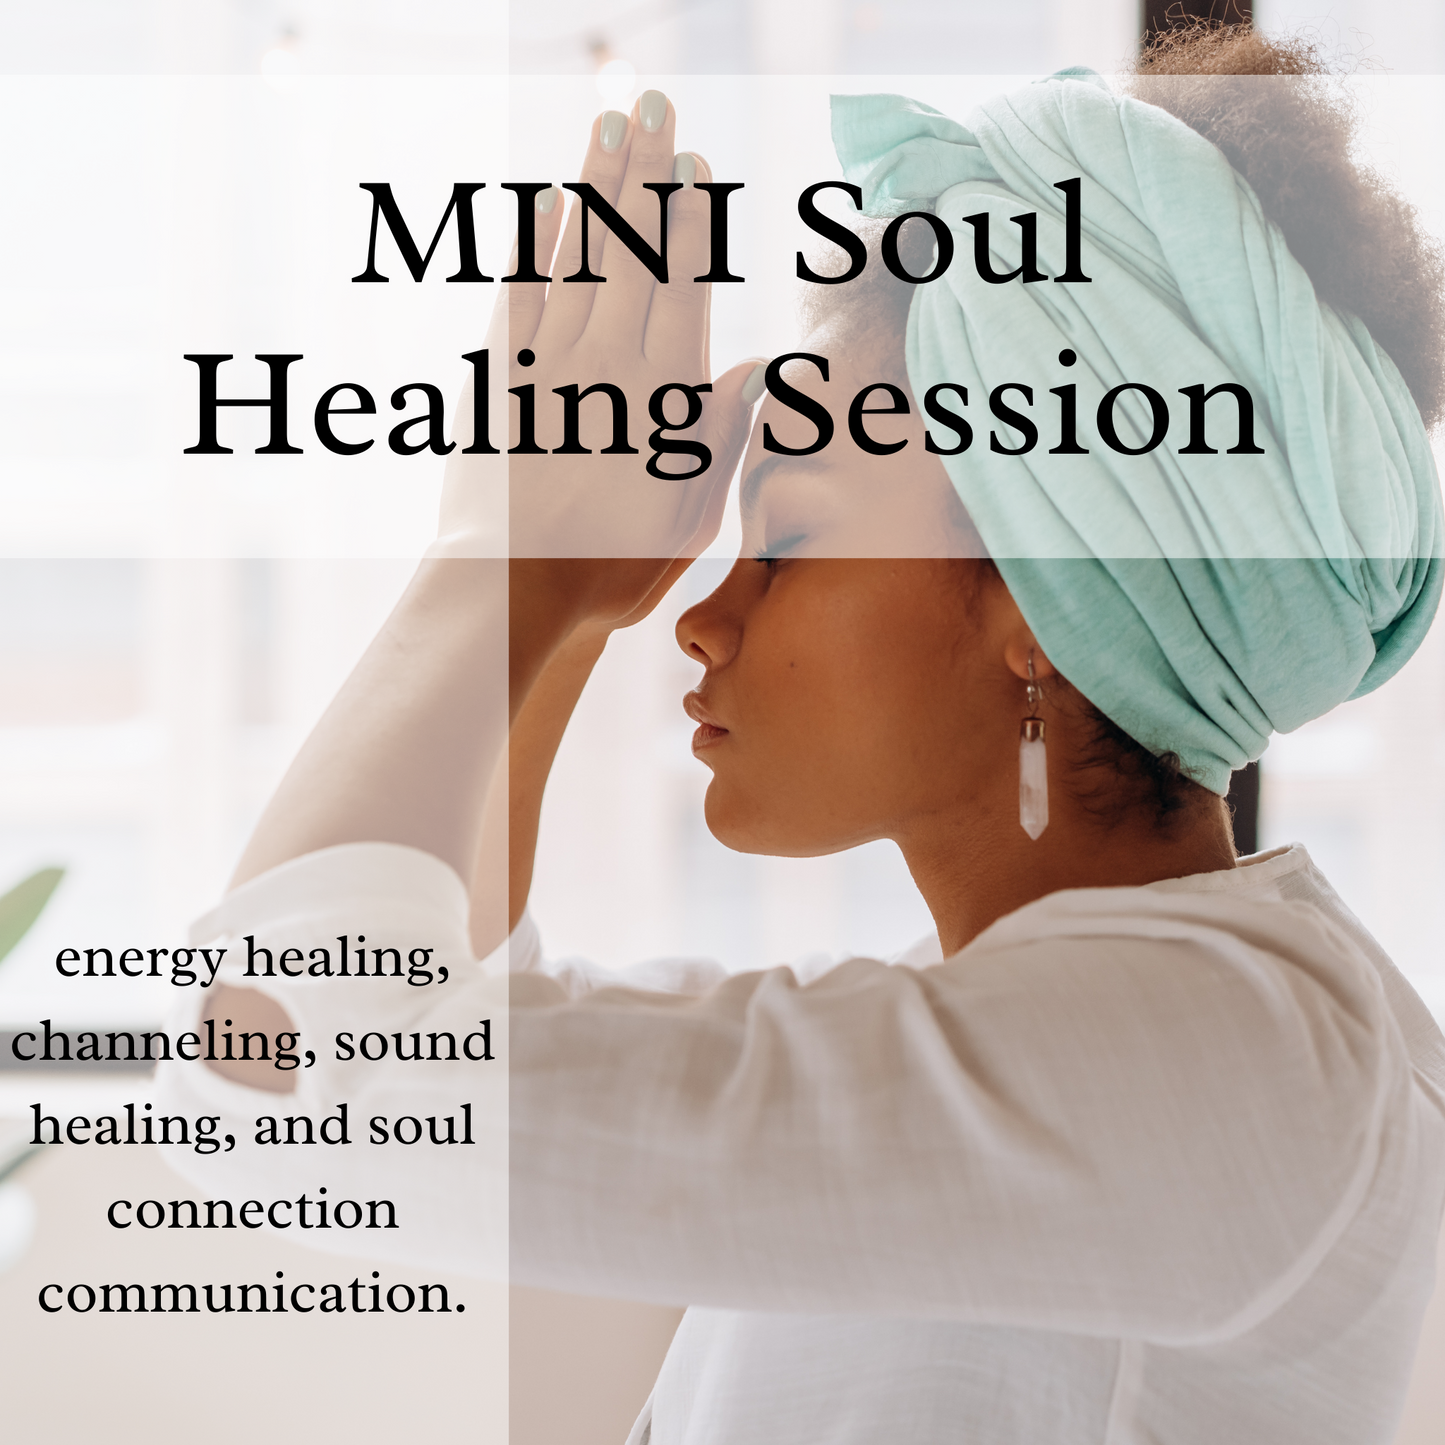 MINI Soul Healing Session: Saturday May 11 & 25